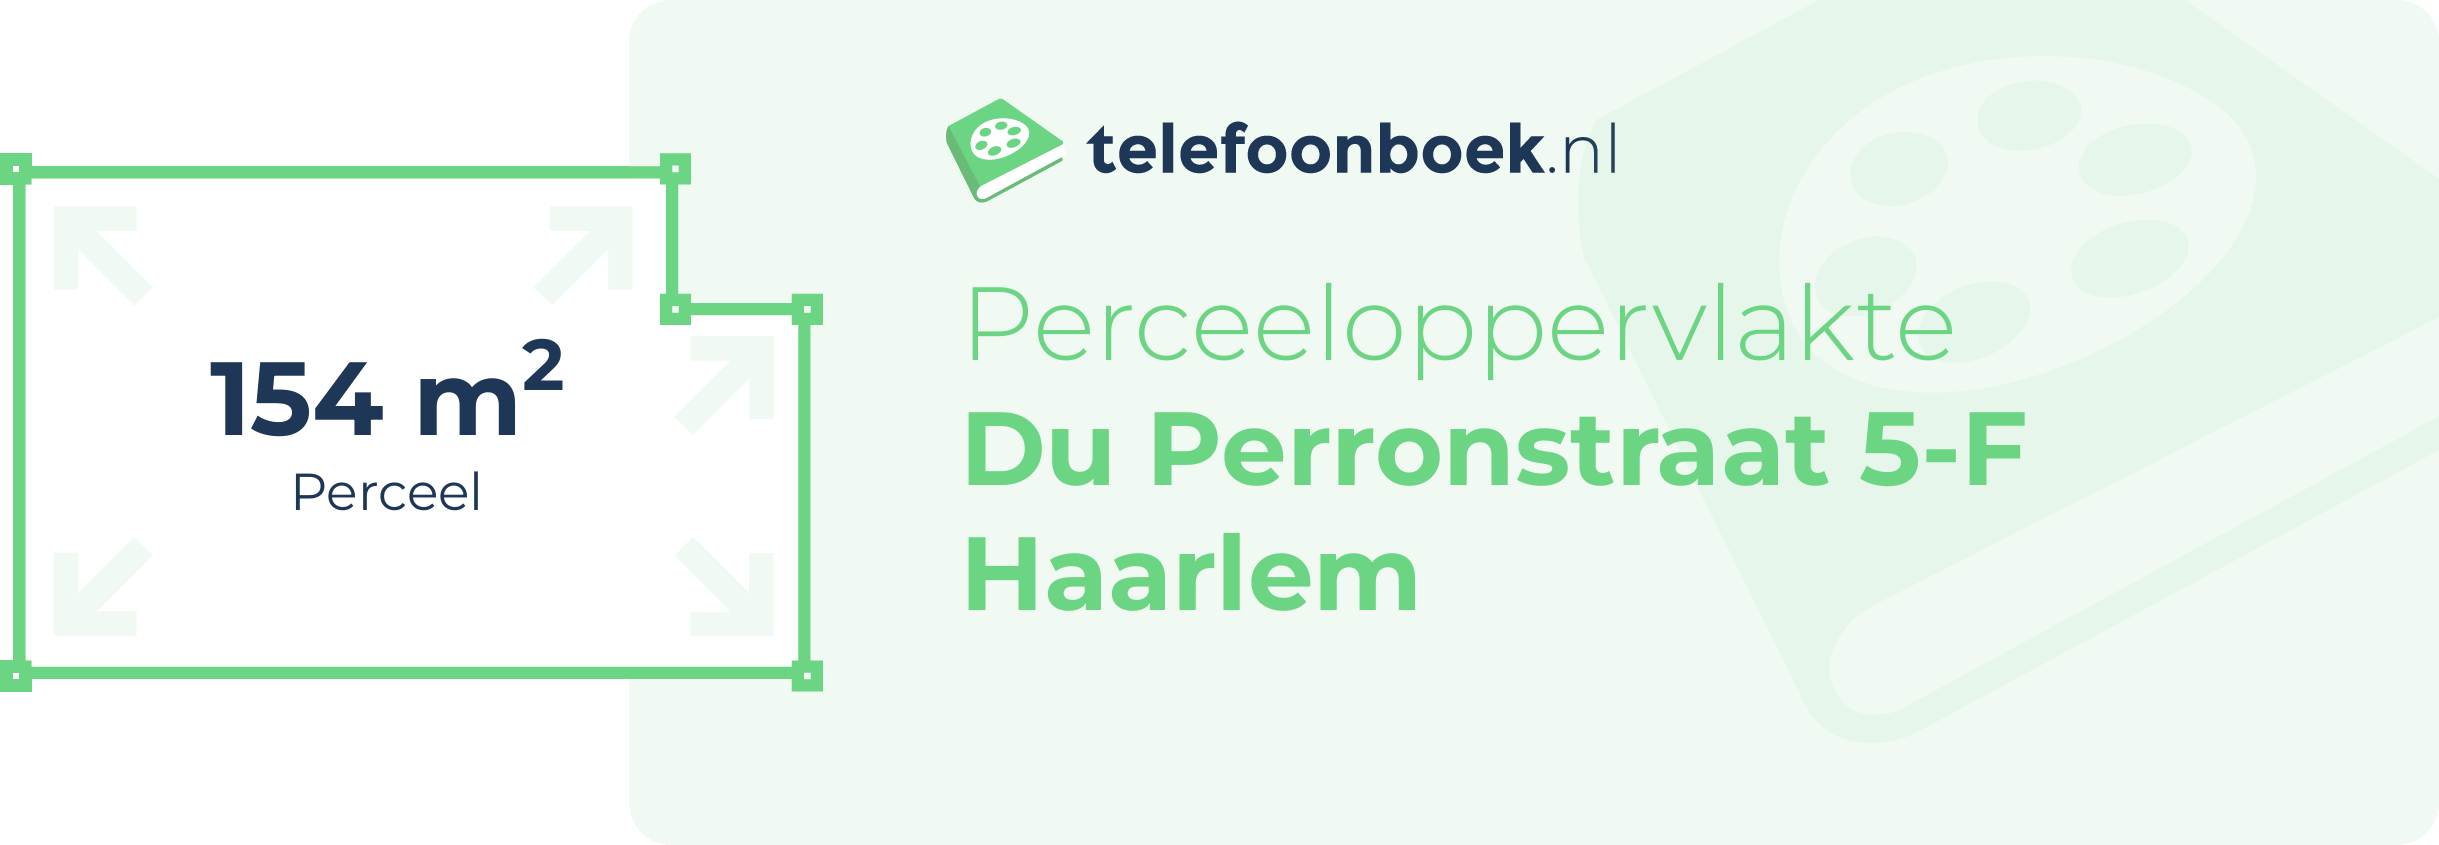 Perceeloppervlakte Du Perronstraat 5-F Haarlem